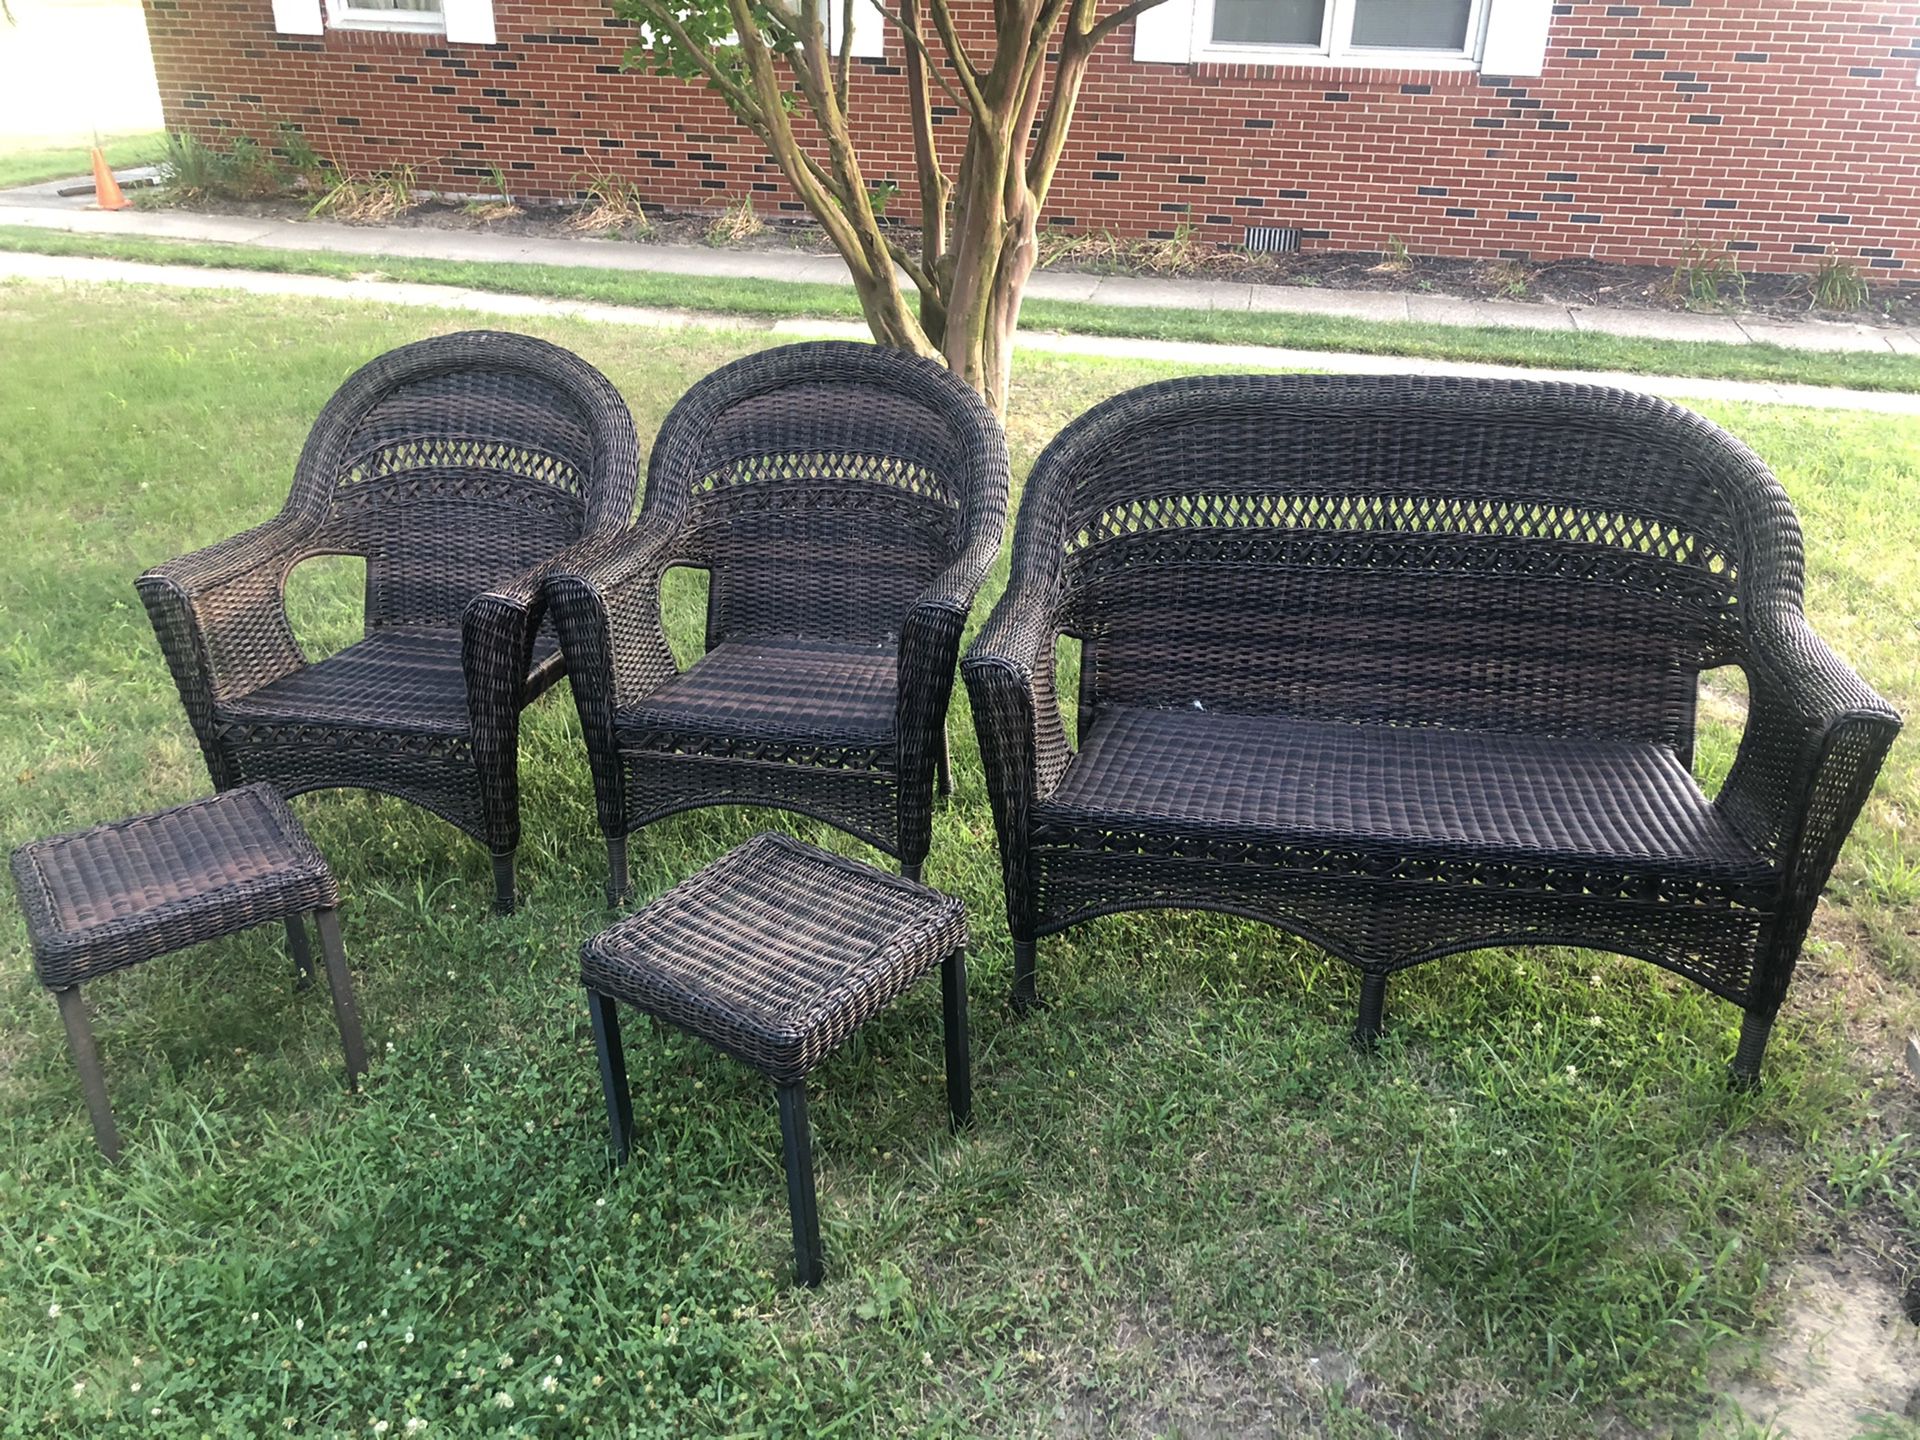 Outdoor patio furniture!